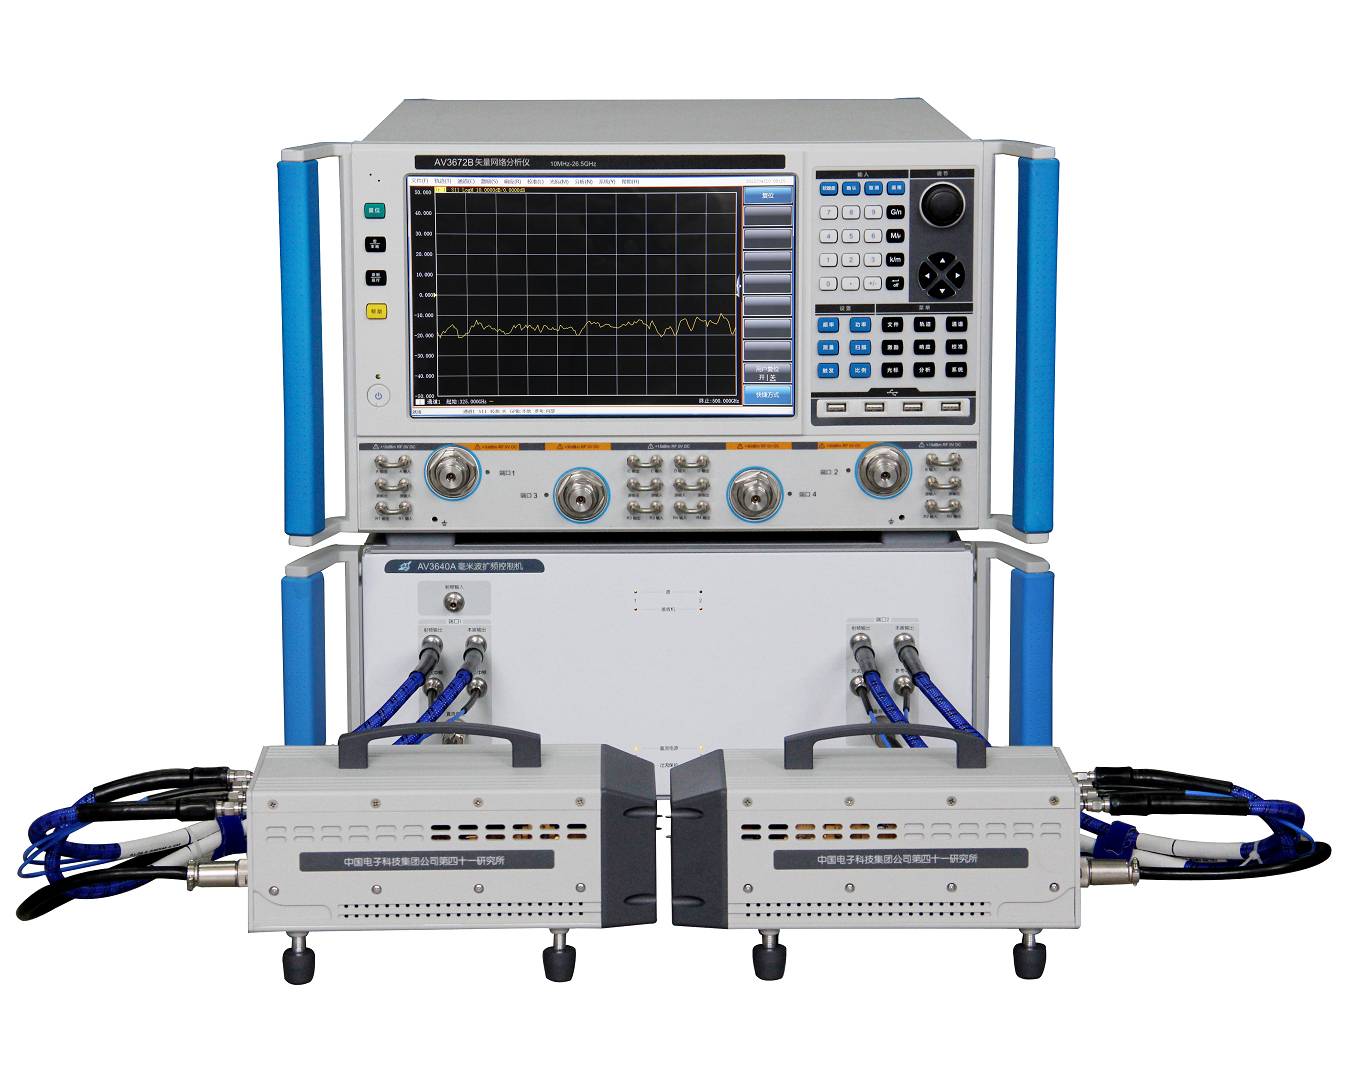 Модули расширения Ceyear серии 364X 
с диапазоном от 40 ГГц до 500 ГГц